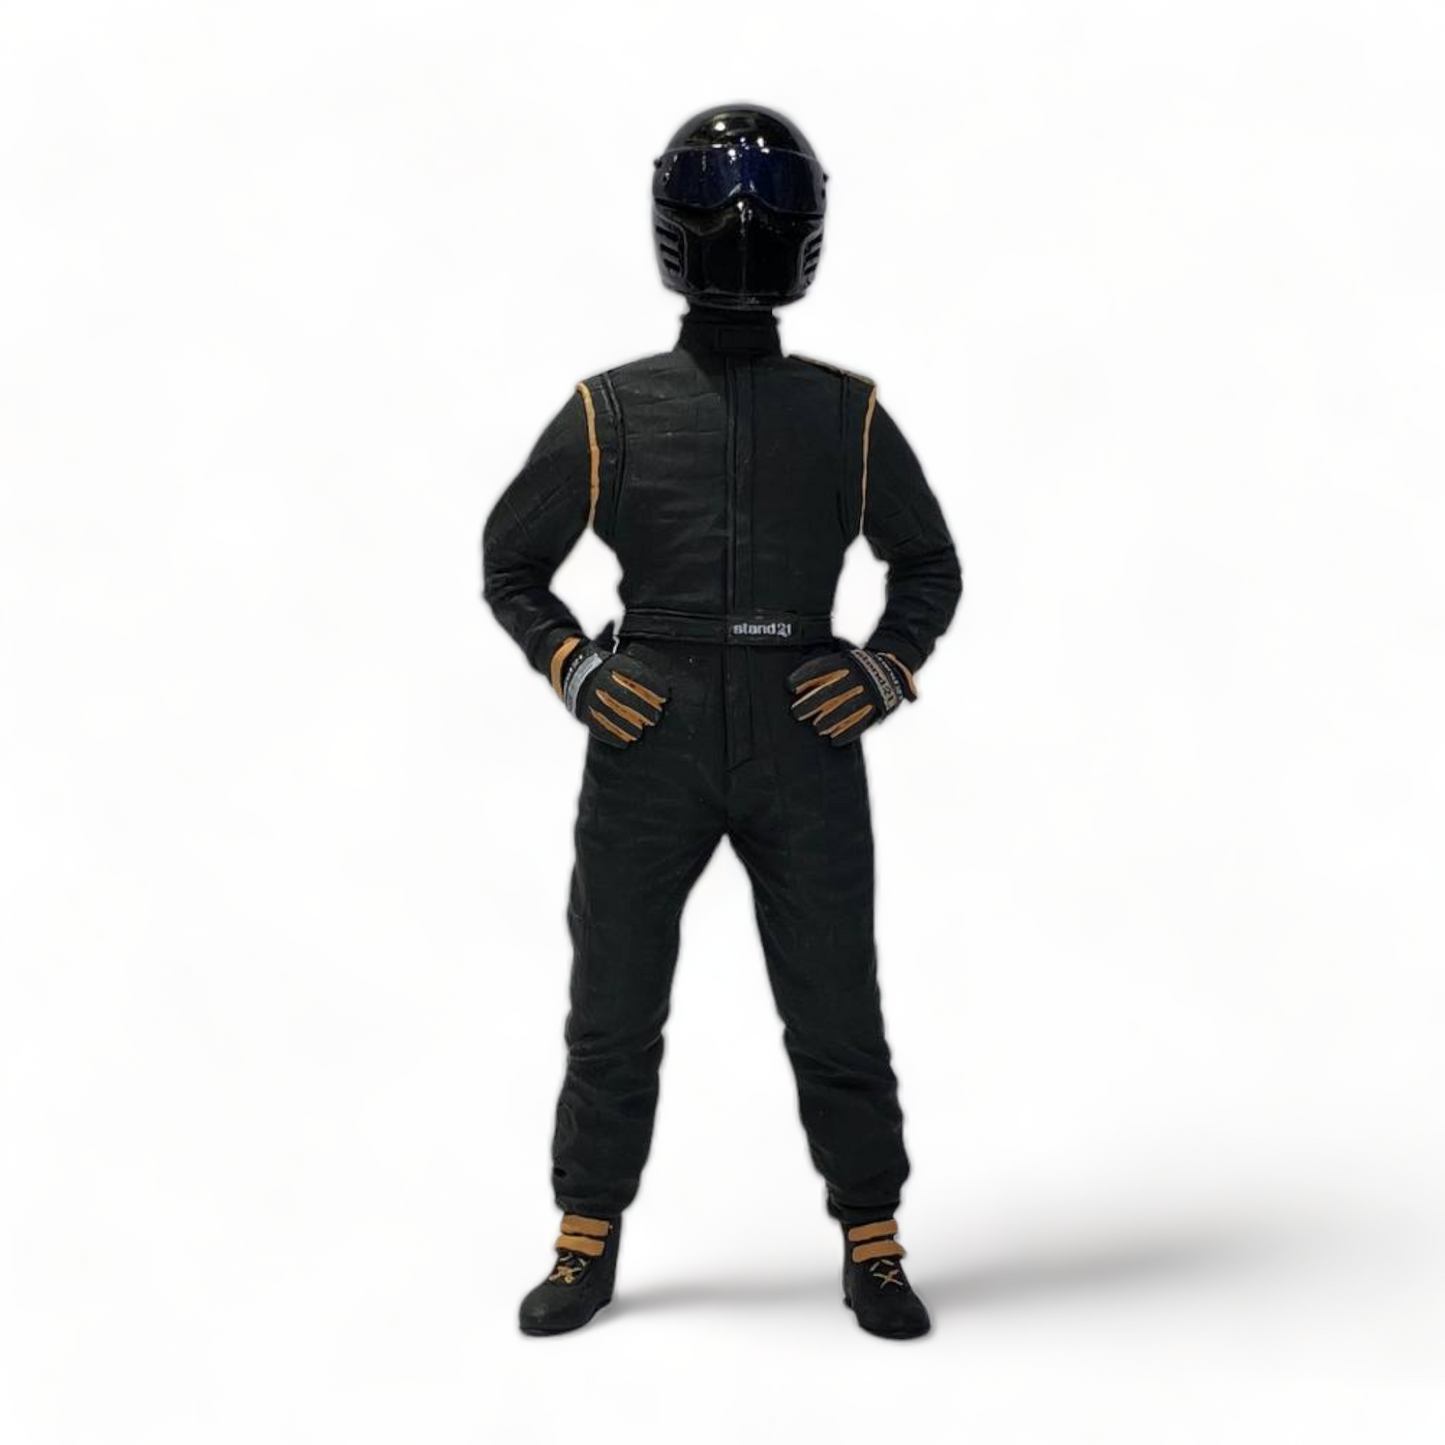 Scale Figure Stig Black Top Gear by SF 1:18|Sold in Dturman.com Dubai UAE.